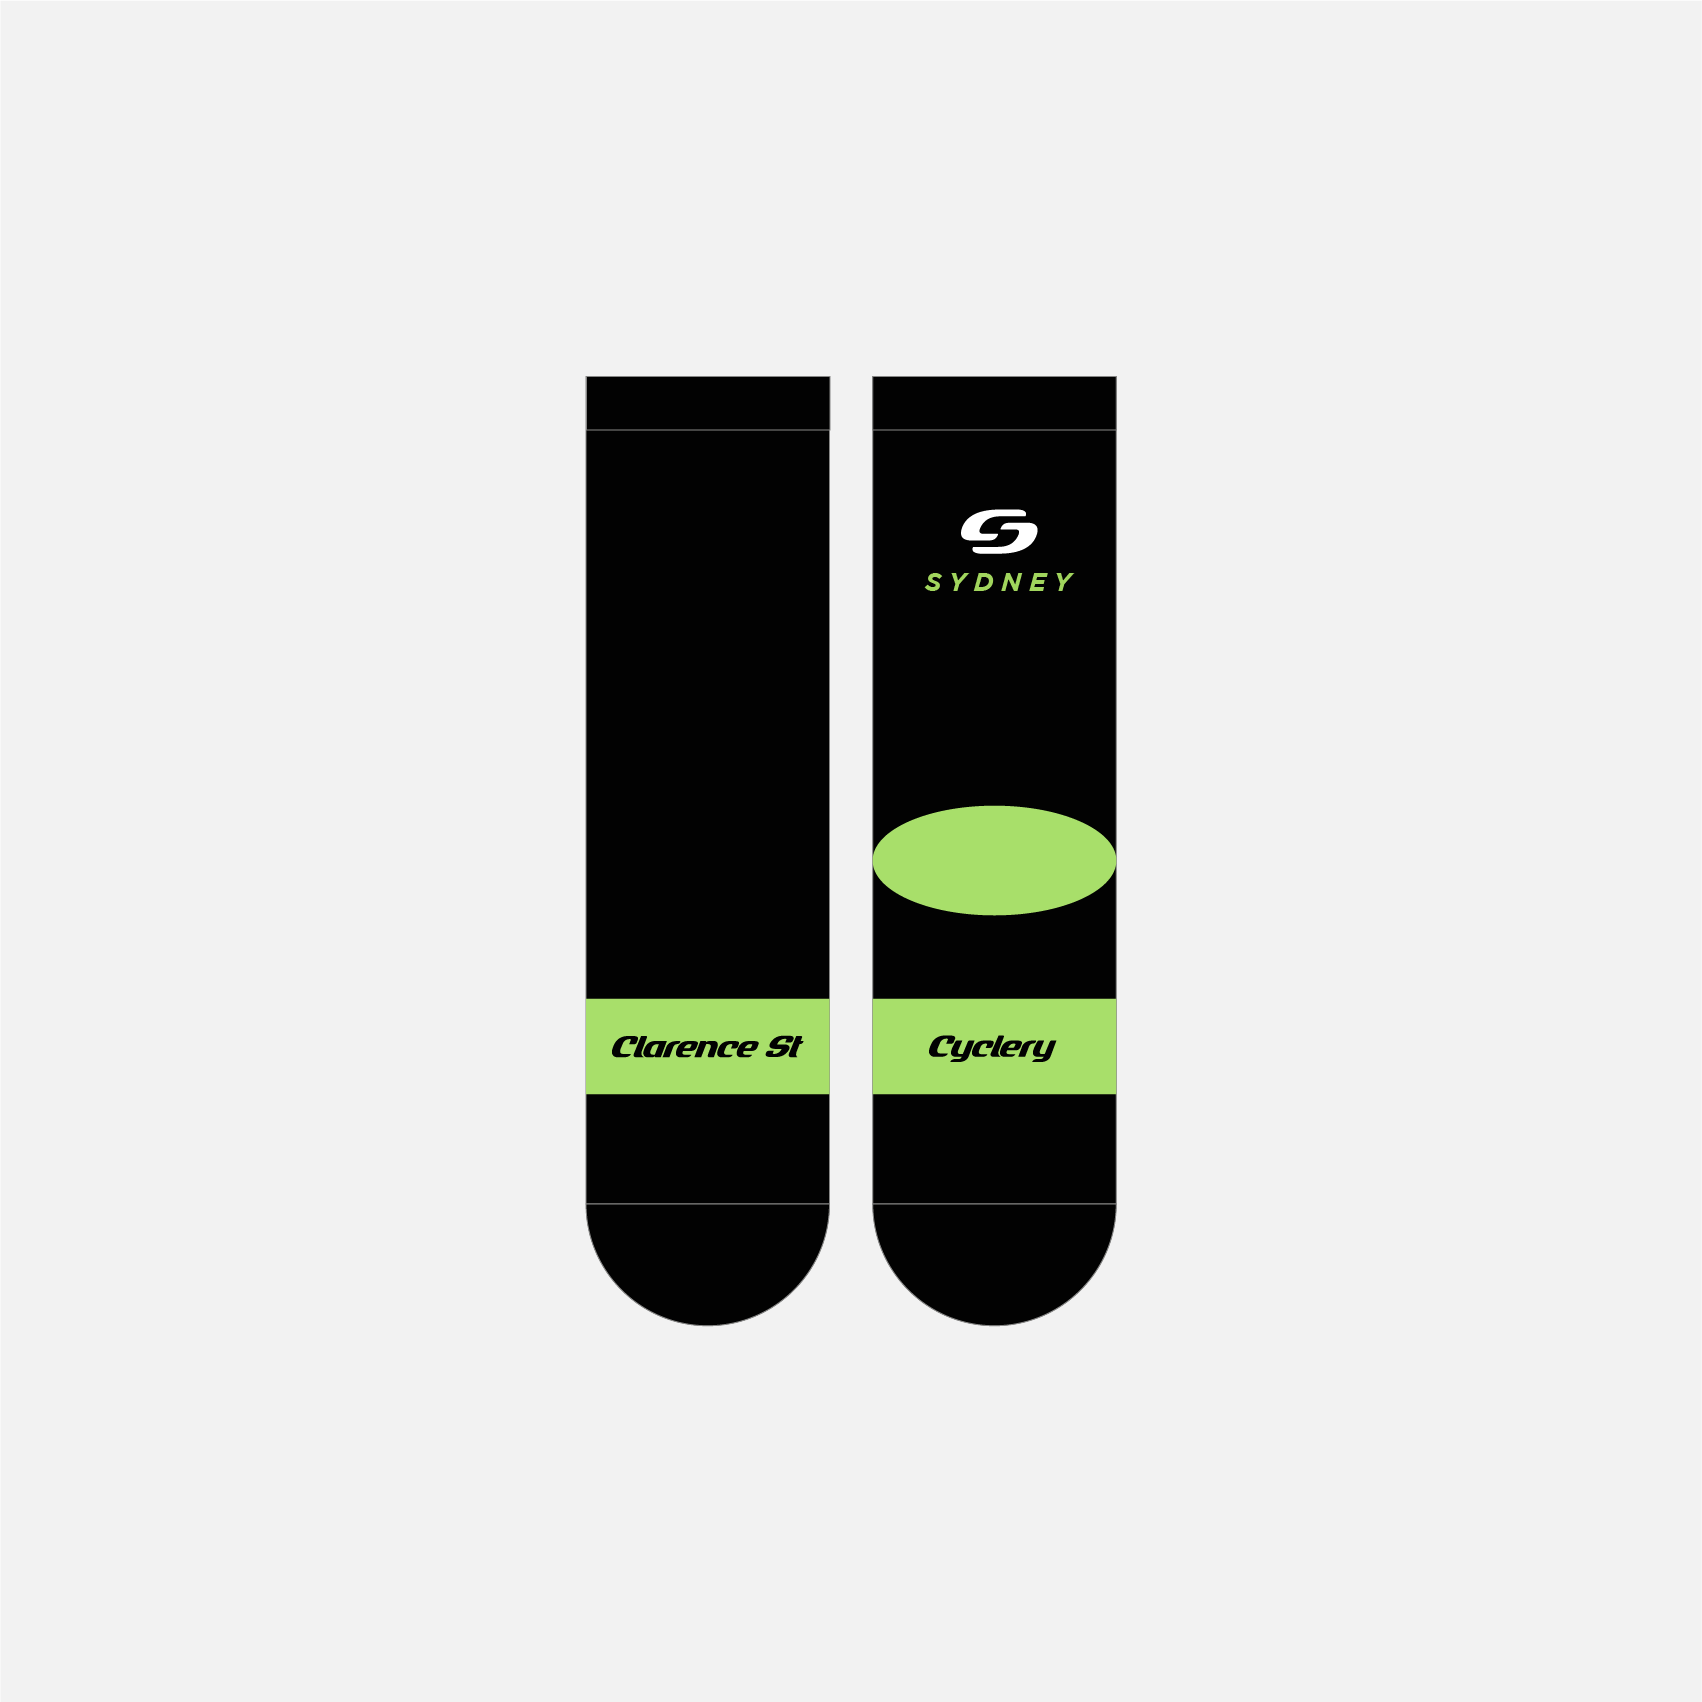 CAPO x Clarence St Cyclery Socks